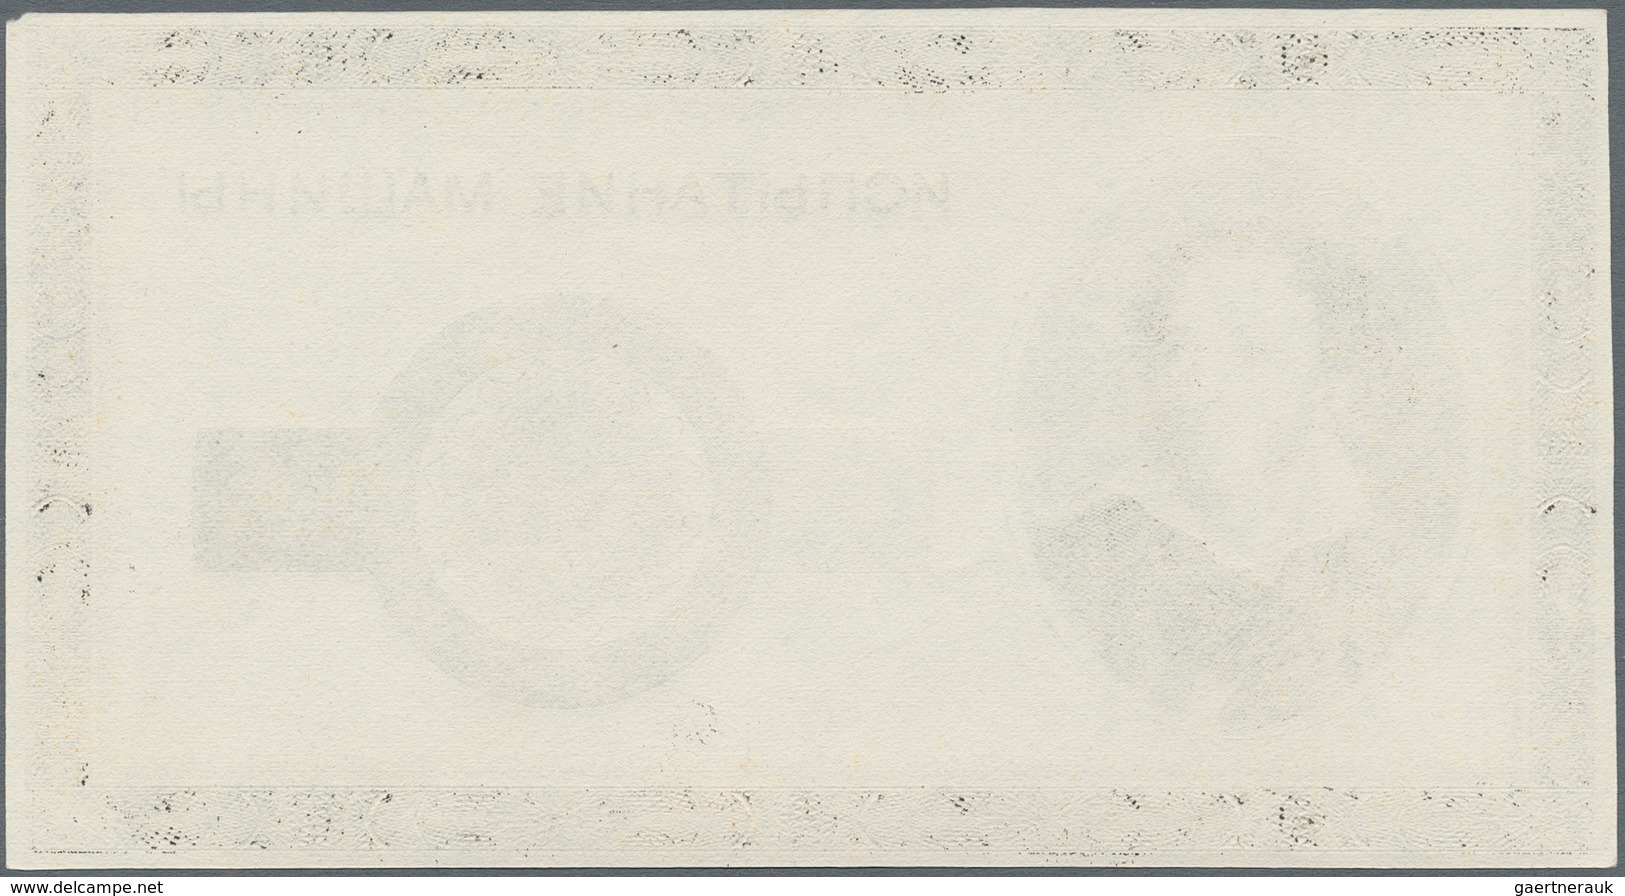 Testbanknoten: Intaglio Printed Test Note With Portrait Of Alexander Pushkin And Text "испытание маш - Ficción & Especímenes